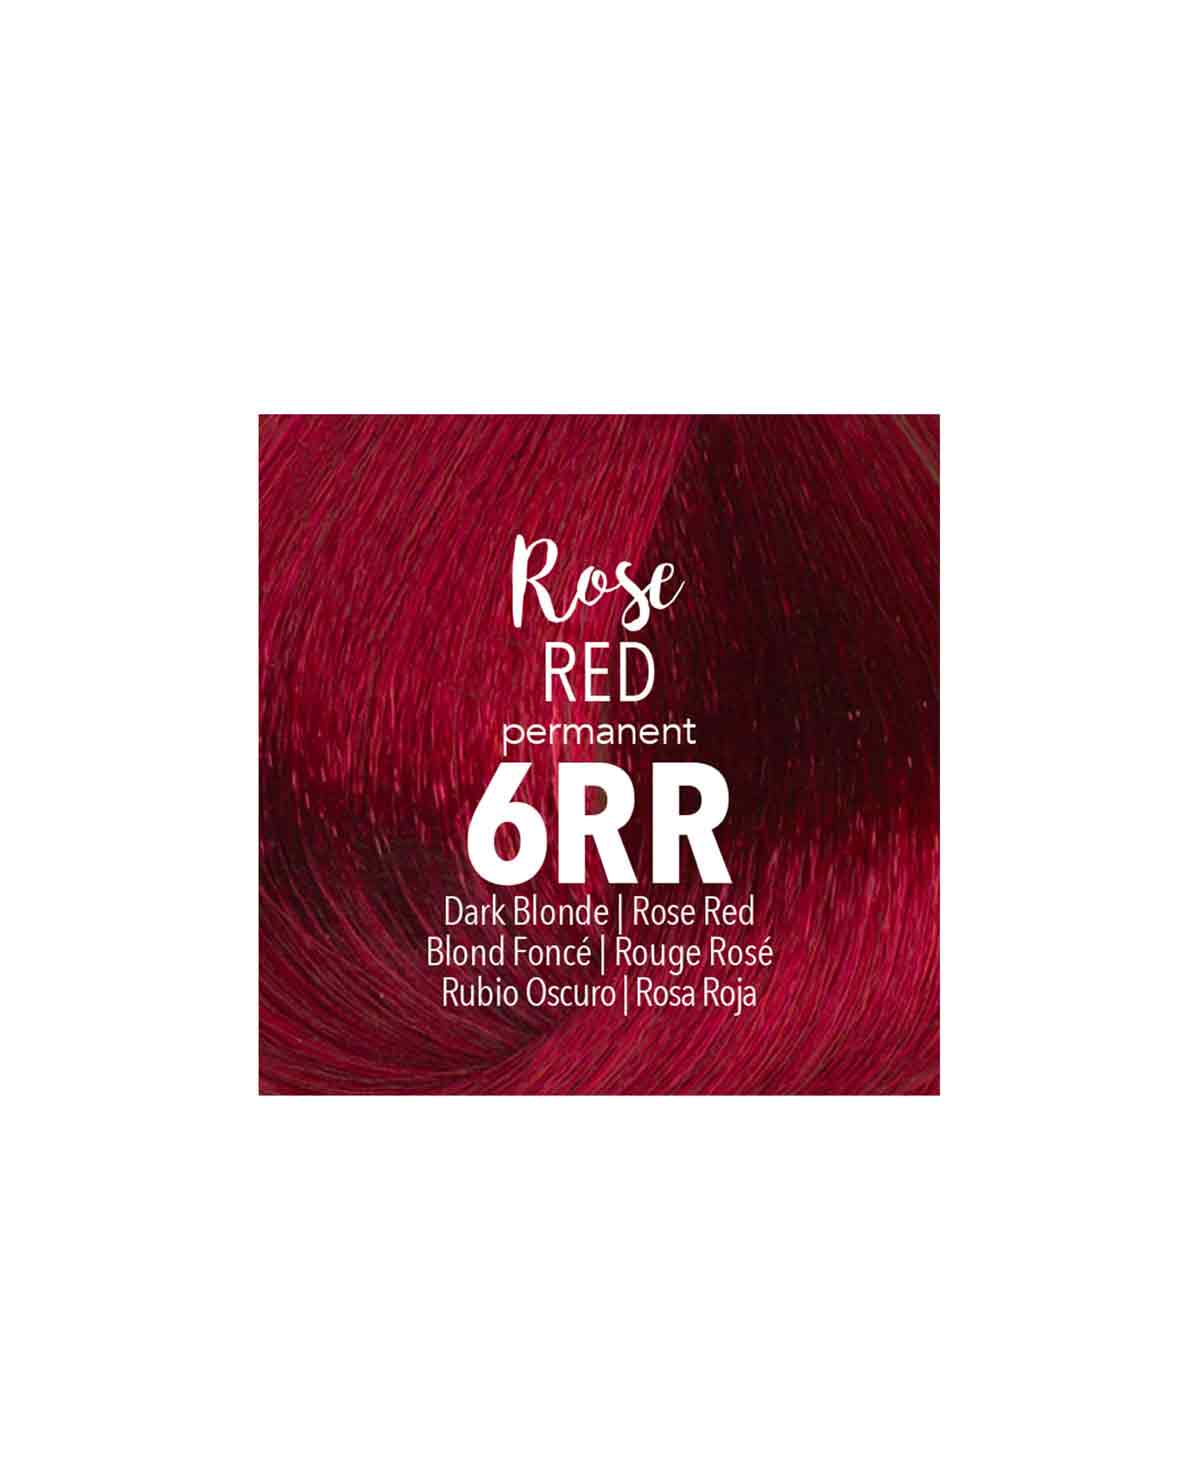 Mydentity - 6RR Dark Blonde Rose Red